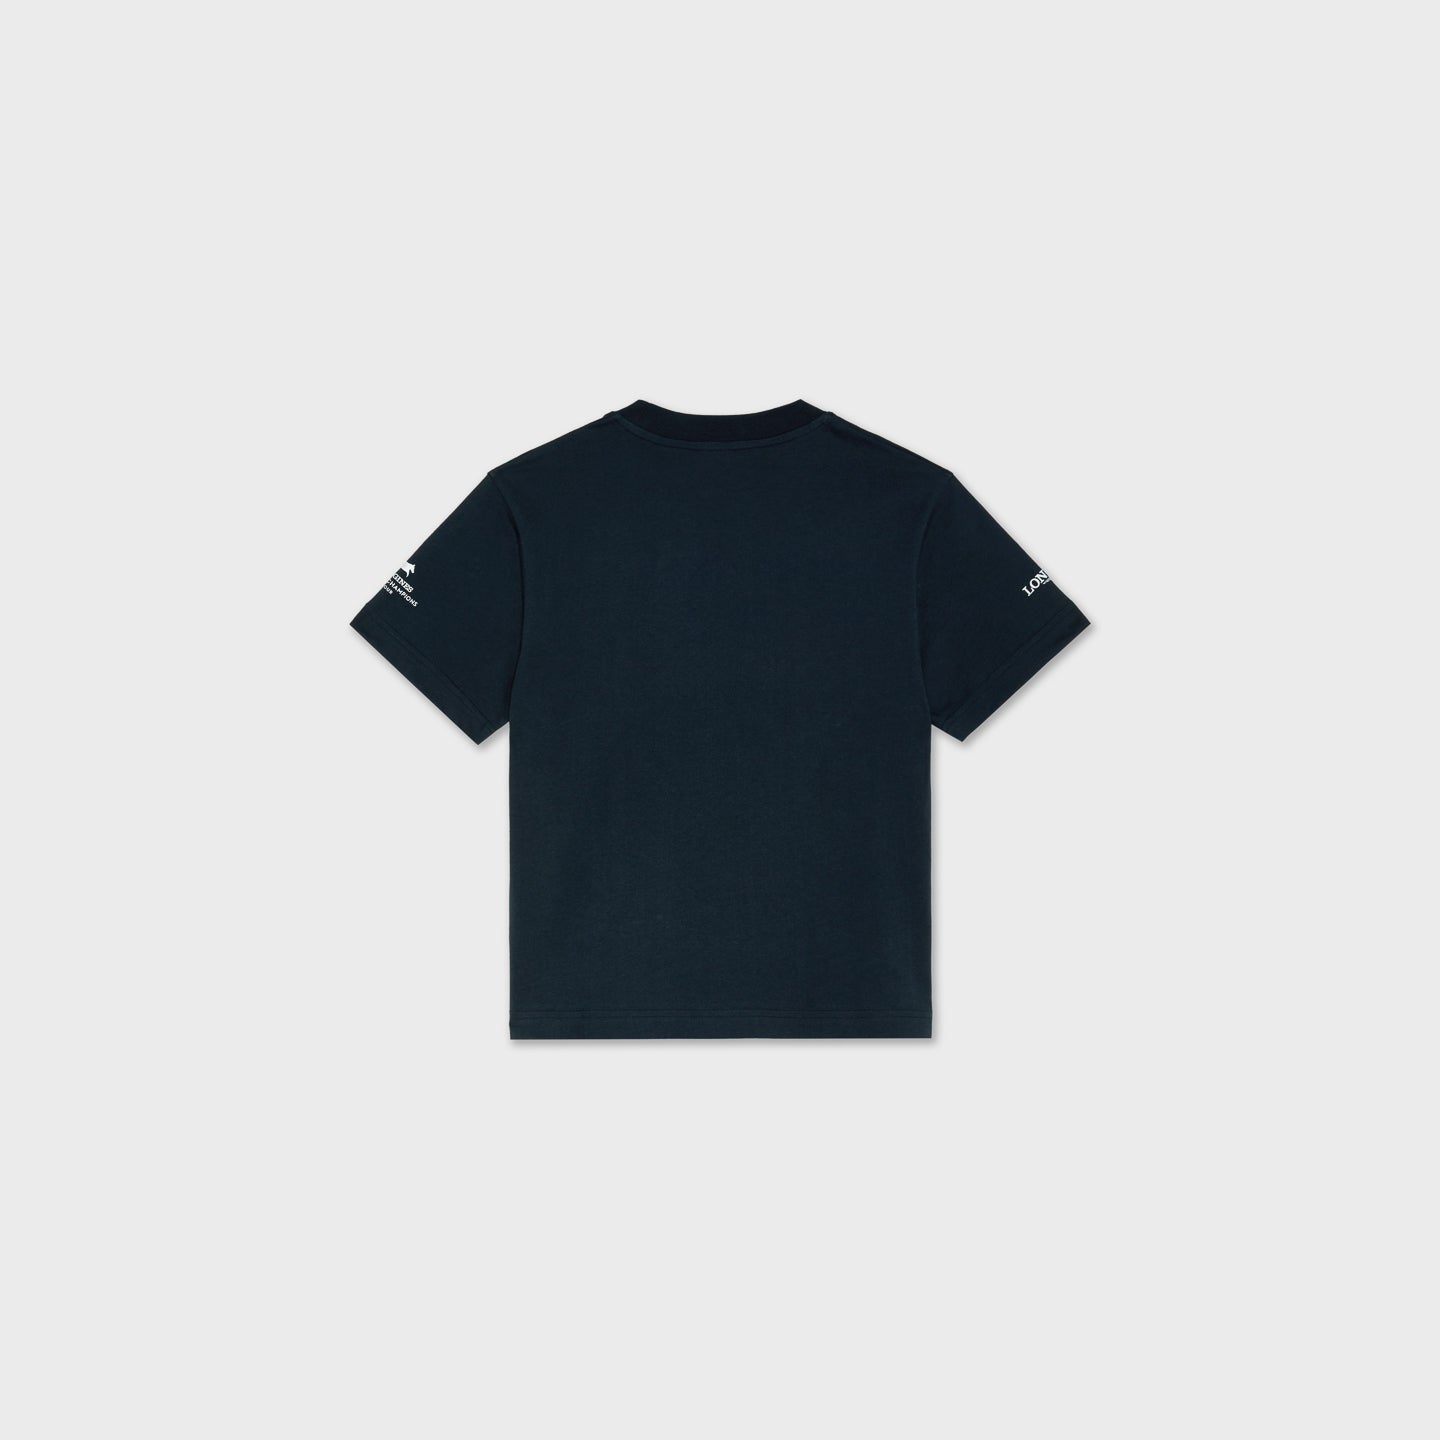 LGCT Sammy #1 Kids T-Shirt/Navy Blue + GIFT STICKER